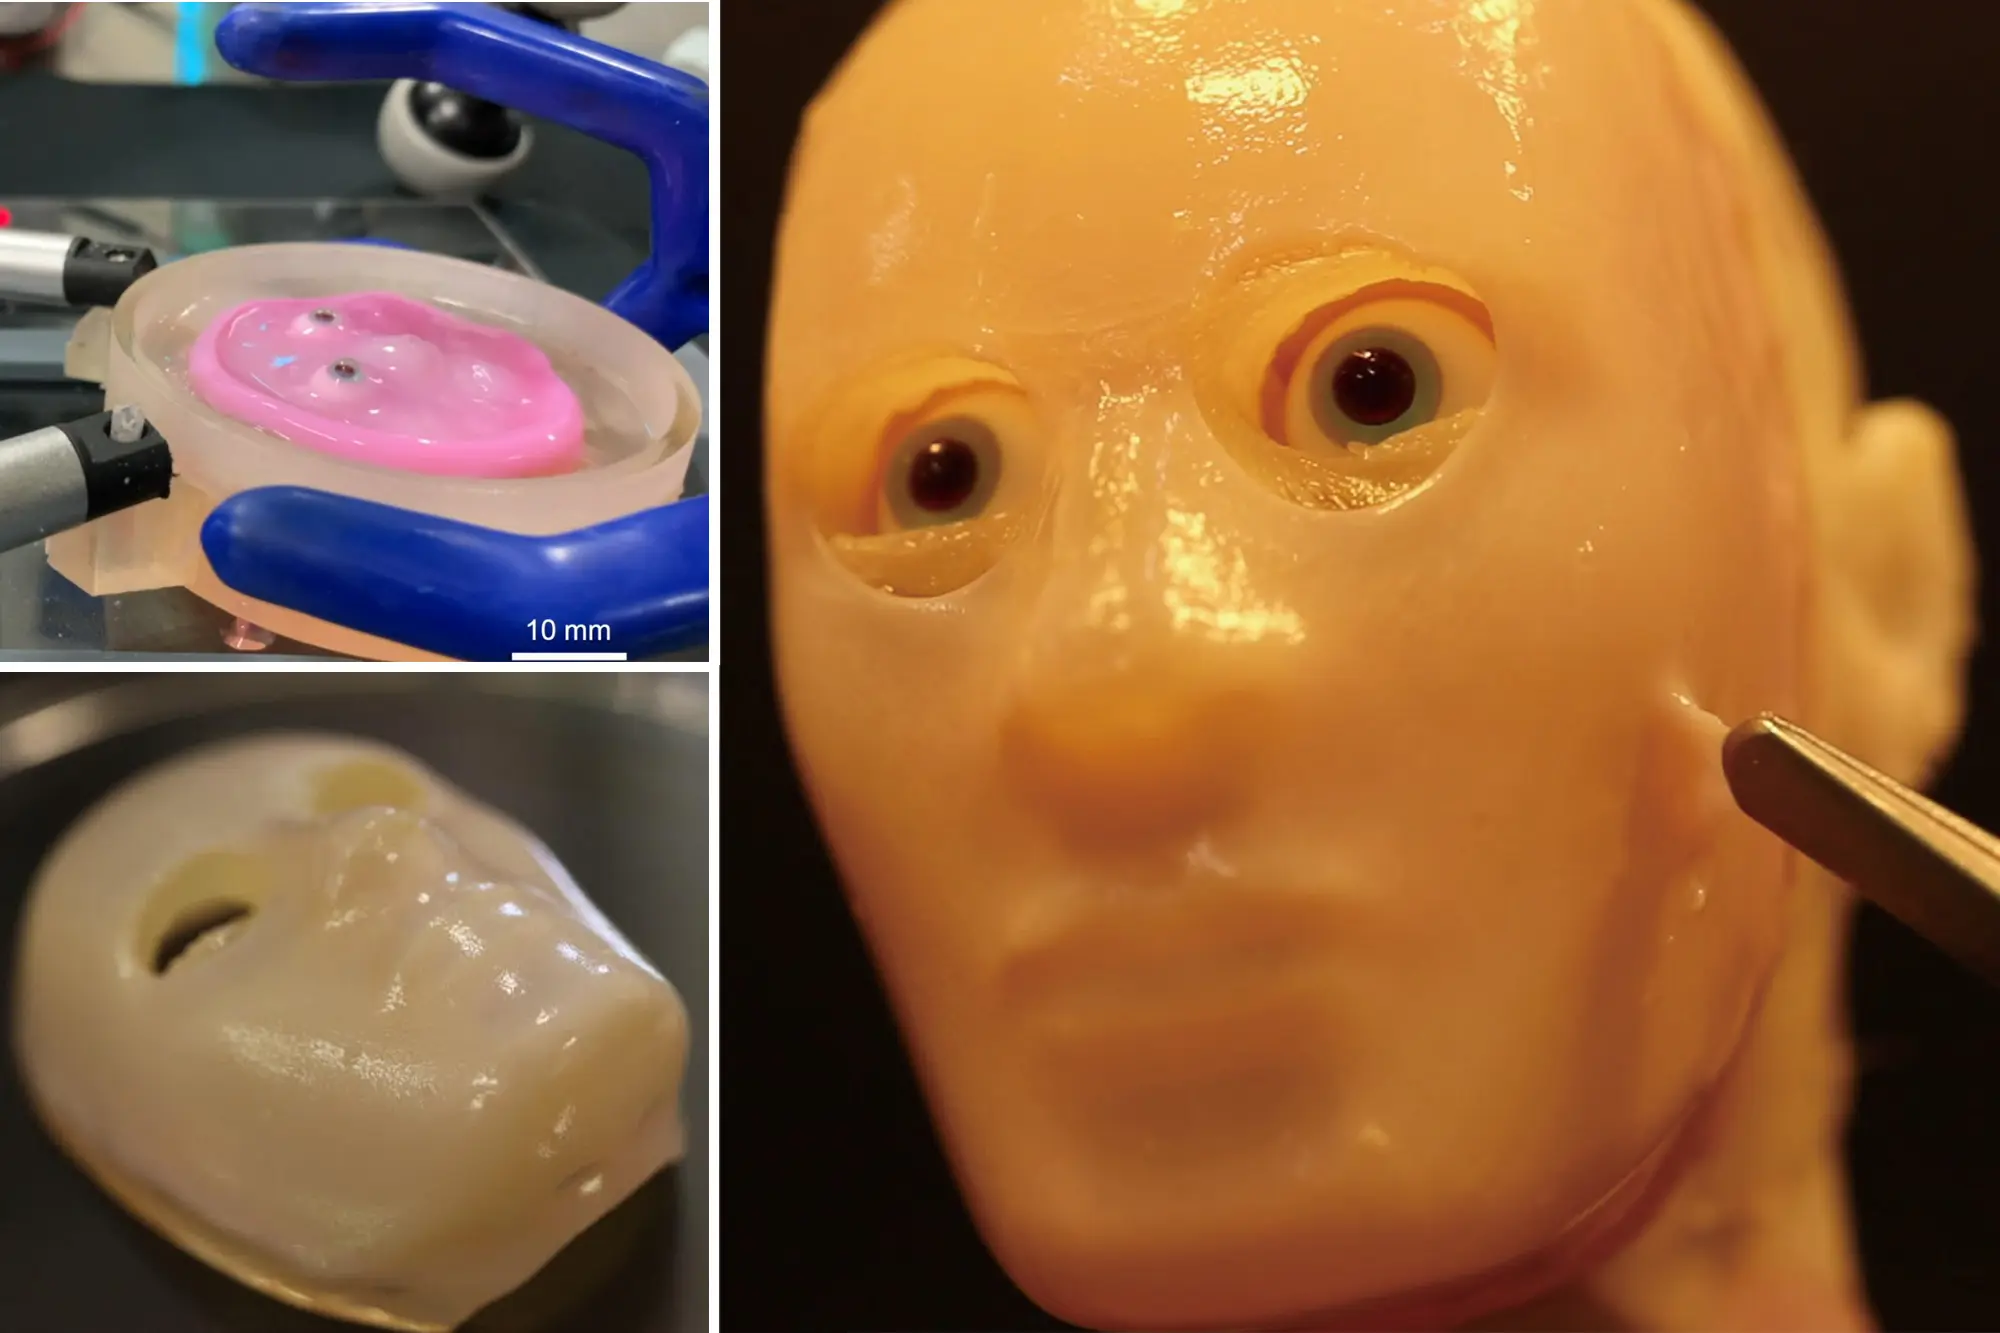 Japan scientists make smiling robot with ‘living’ skin